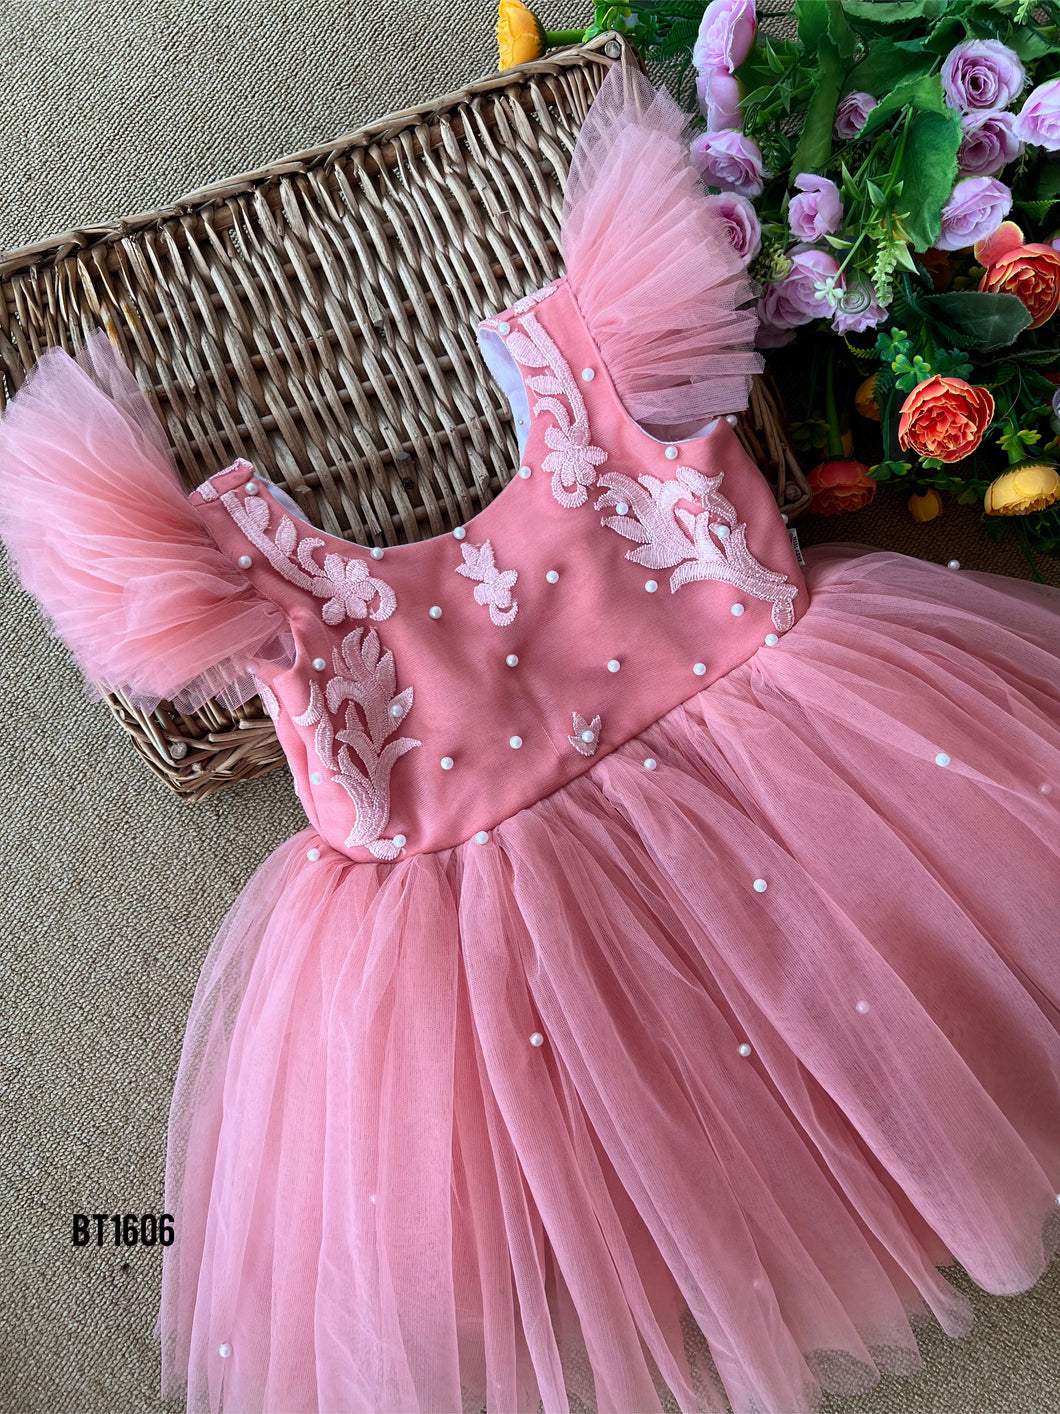 BT1606 Blush Blossom Ballet Dress - Twirl into Delight!